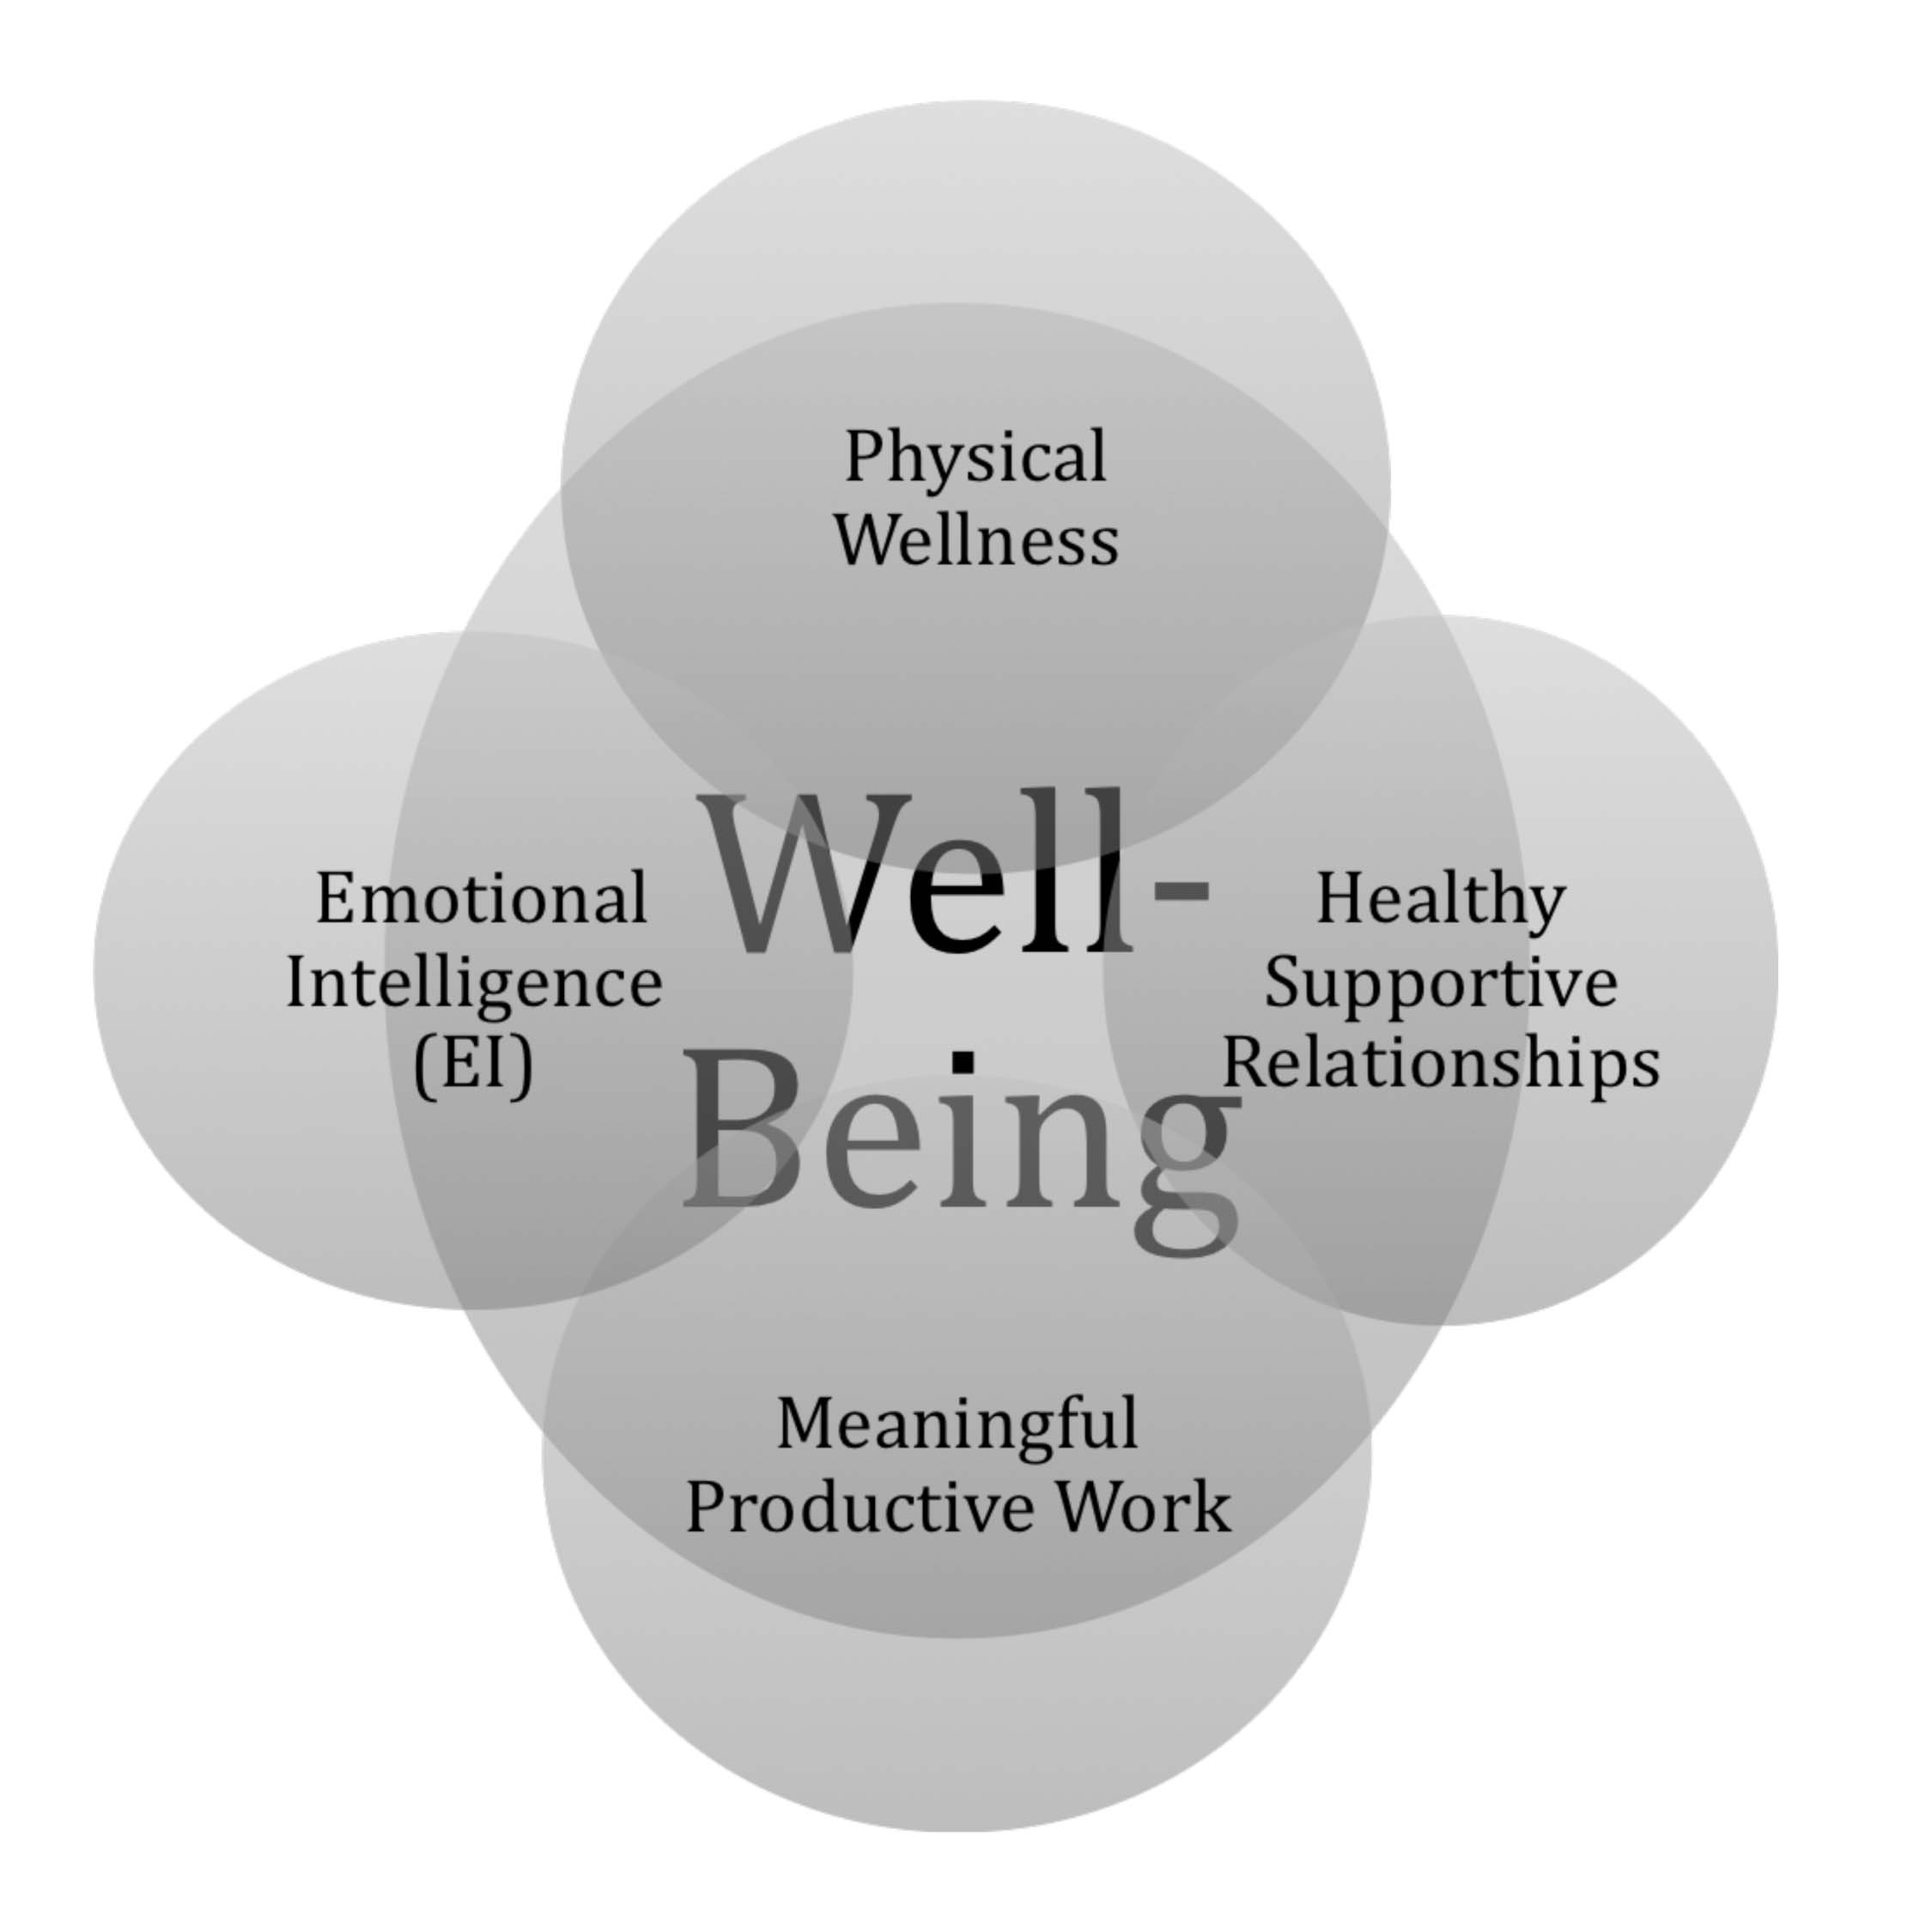 Better component. Система well being. Well being компоненты. Well being для сотрудников. Принципы Wellbeing.